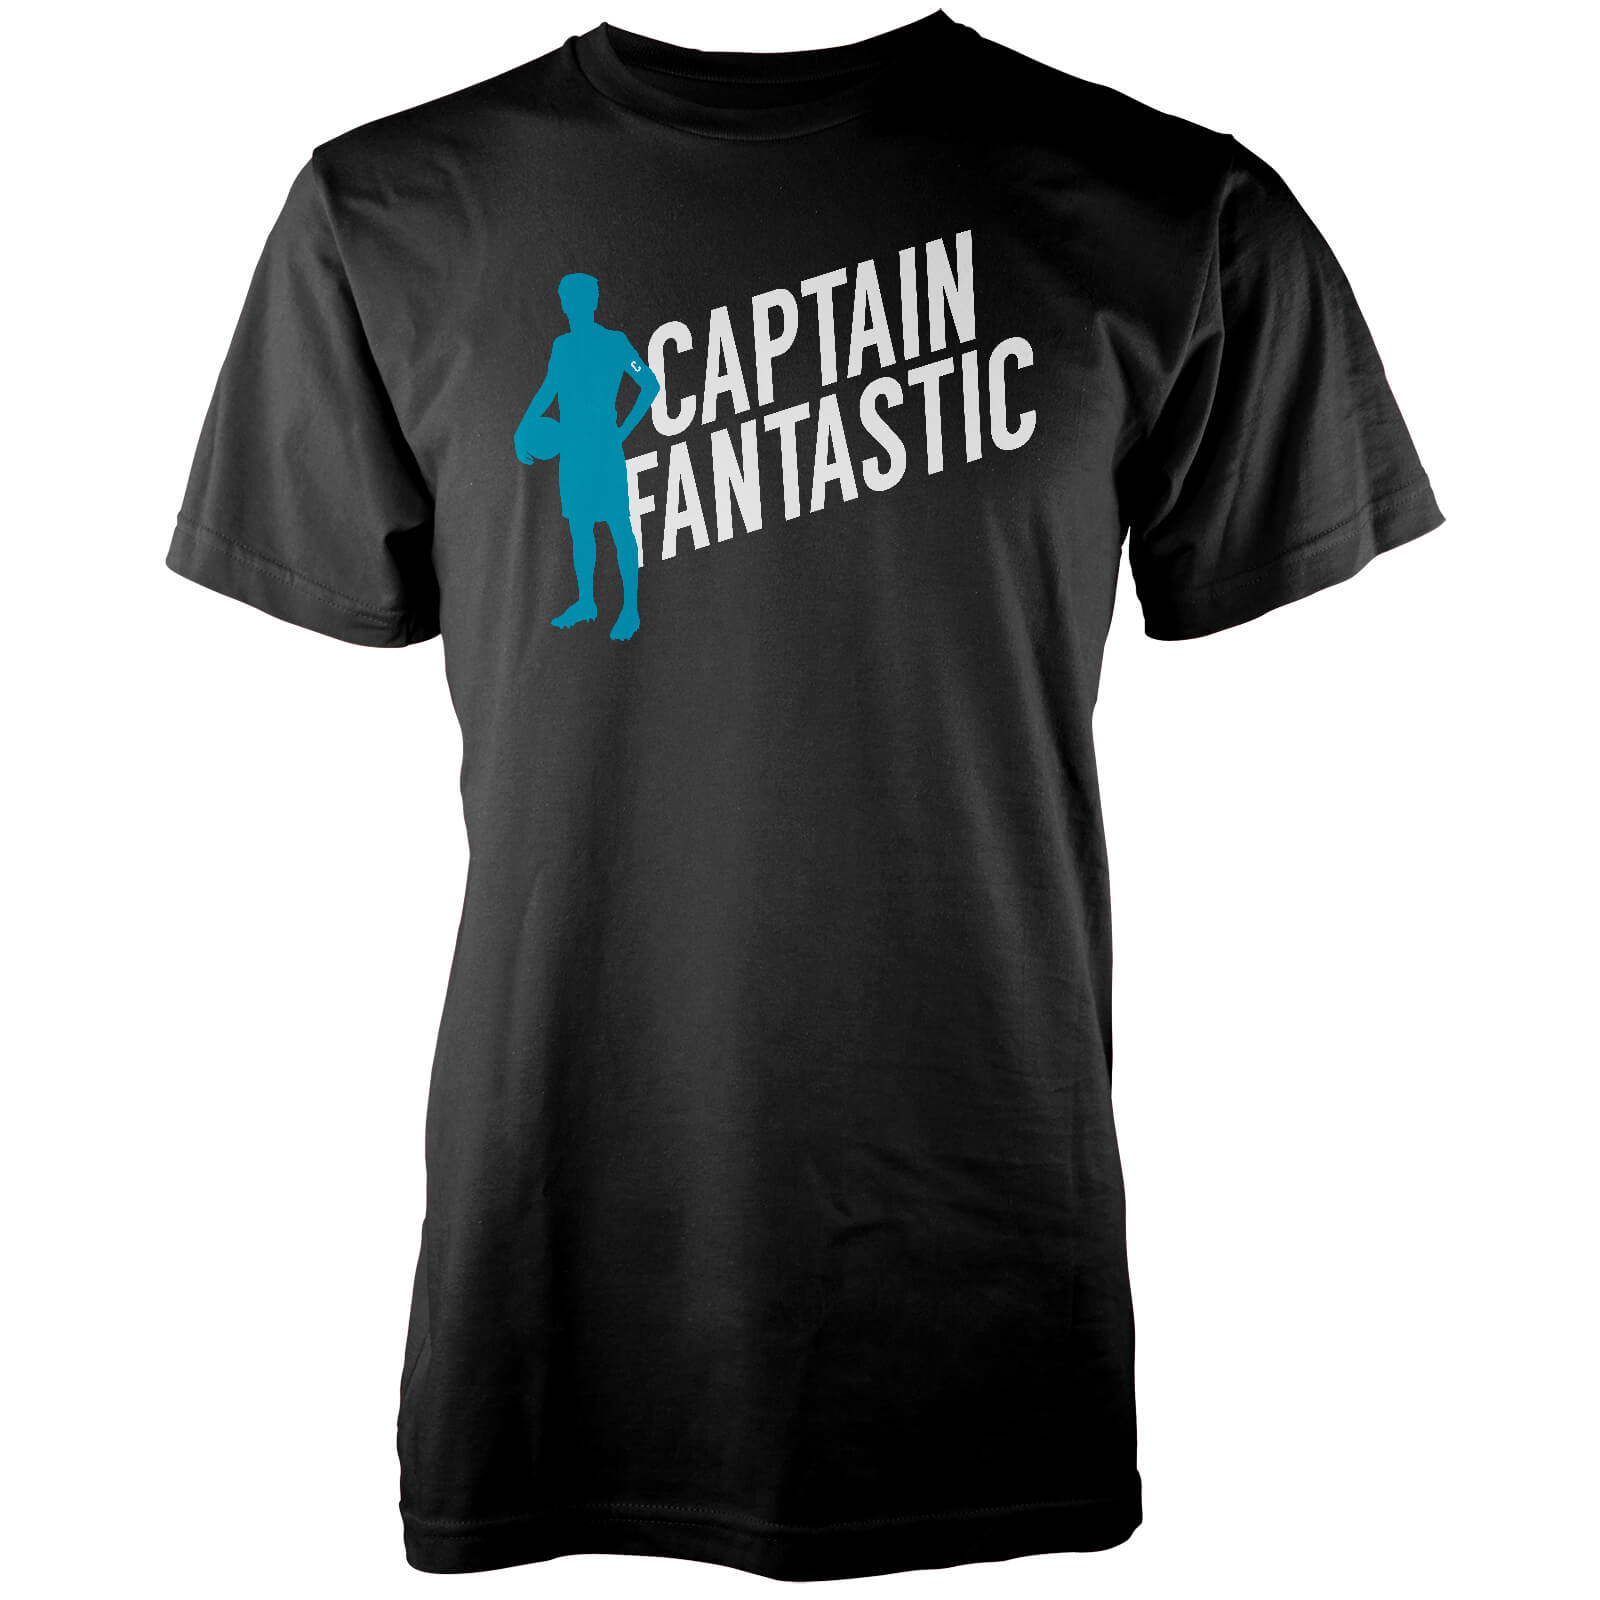 Captain Fantastic Men's Black T-Shirt - S - Black